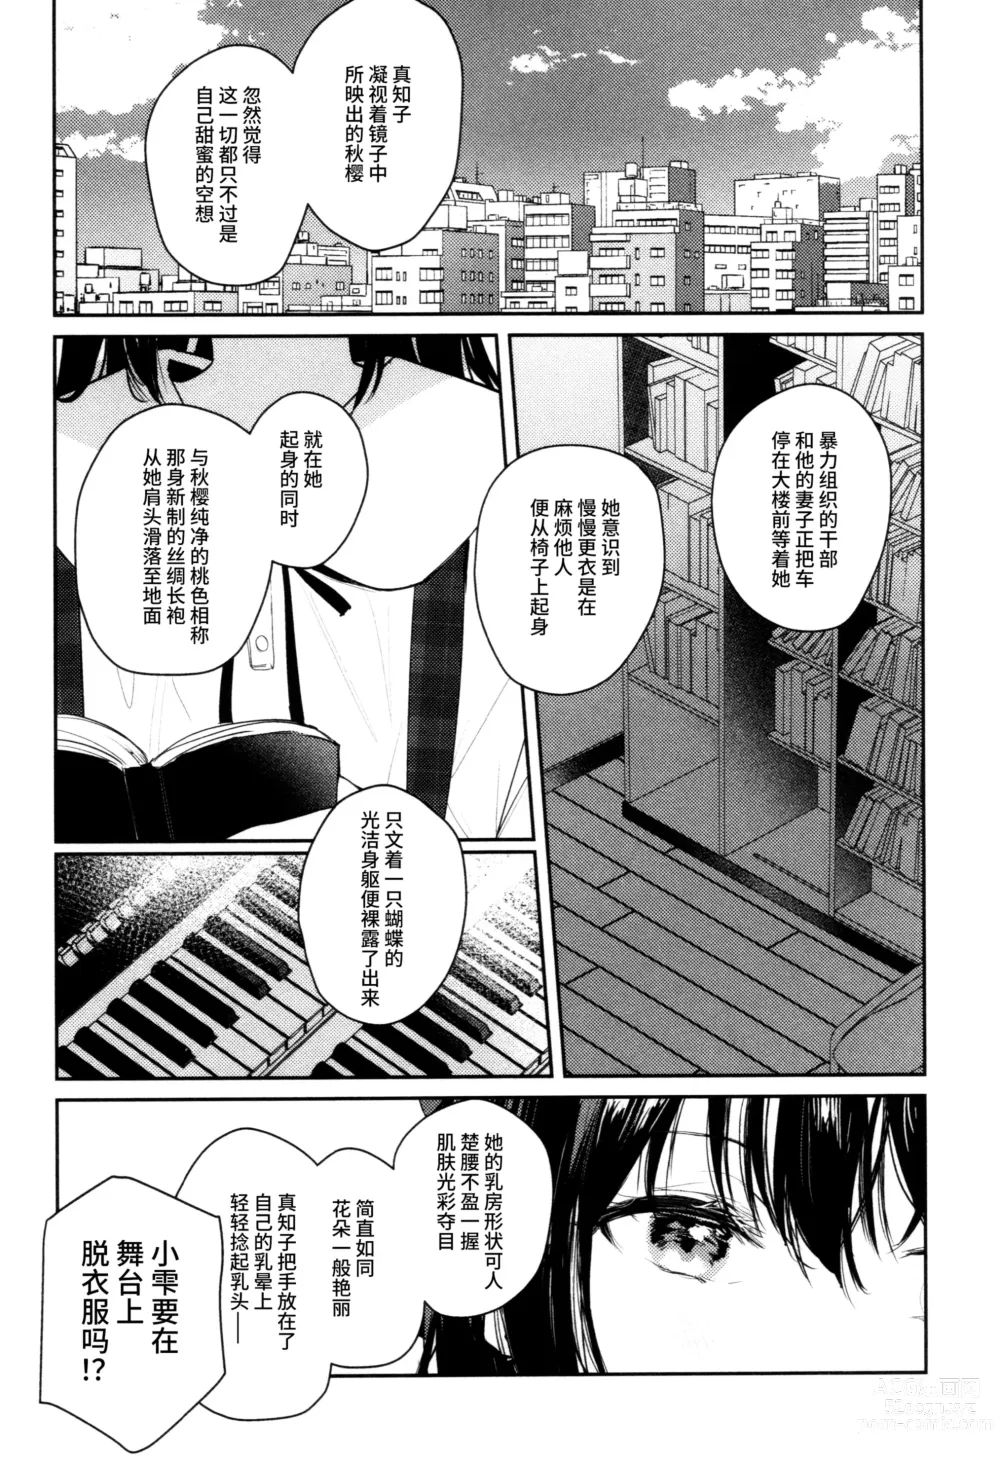 Page 3 of doujinshi 太过甜美的谢幕